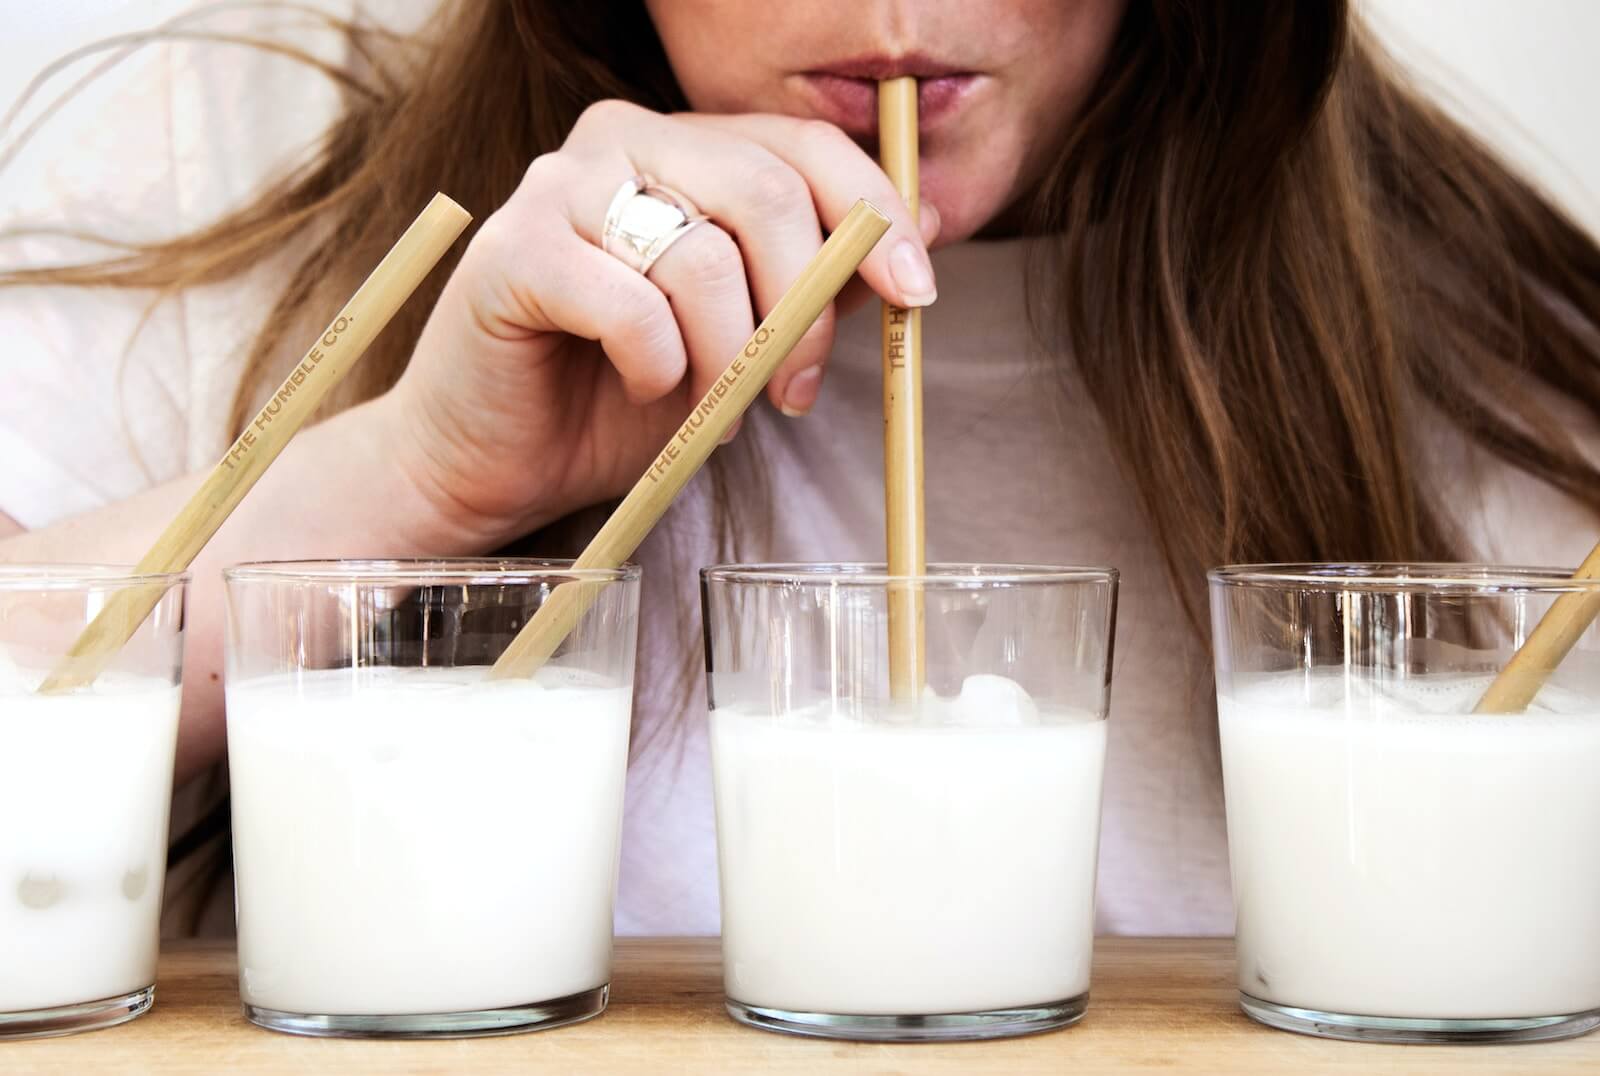 A woman taste-testing milks